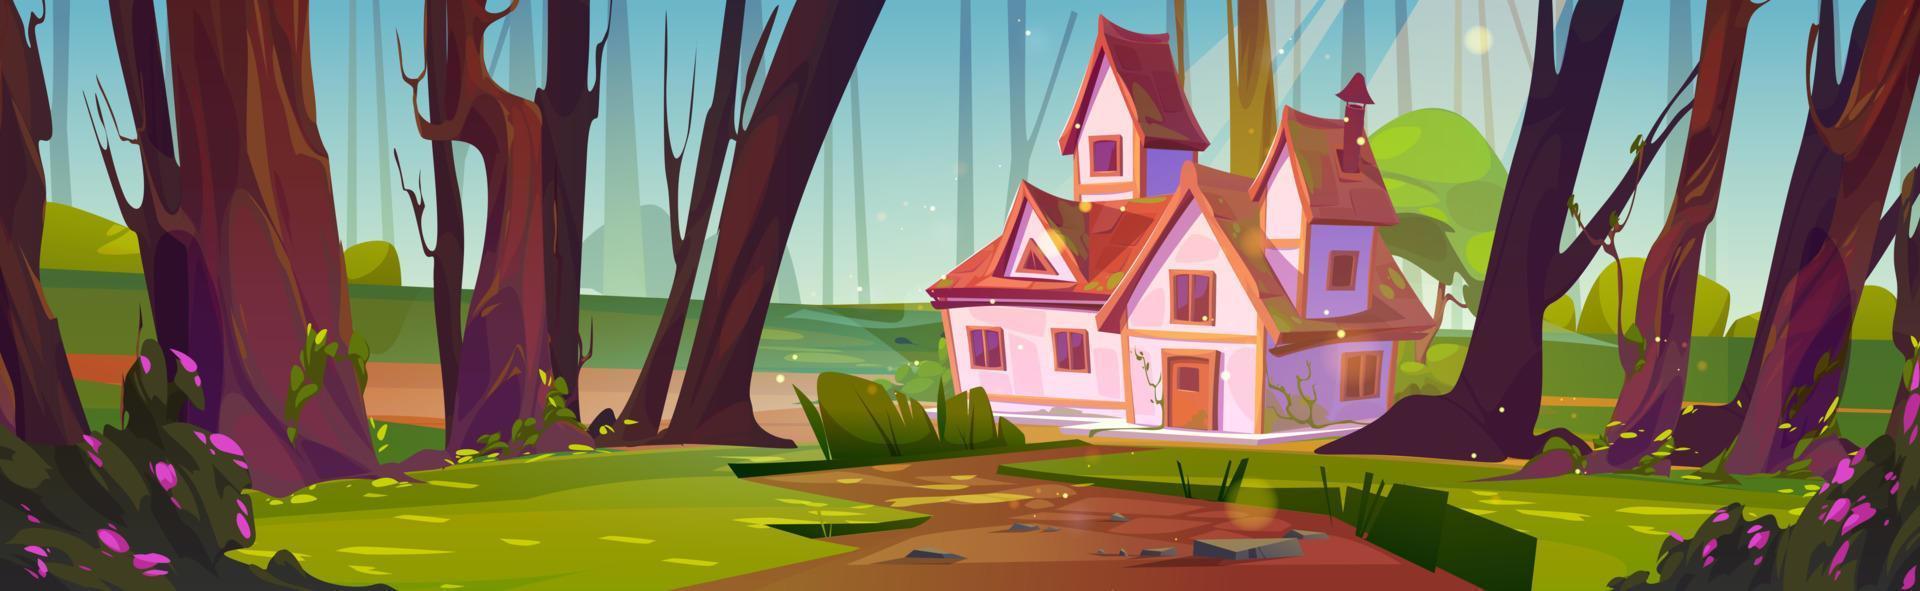 Cartoon house in summer forest vector